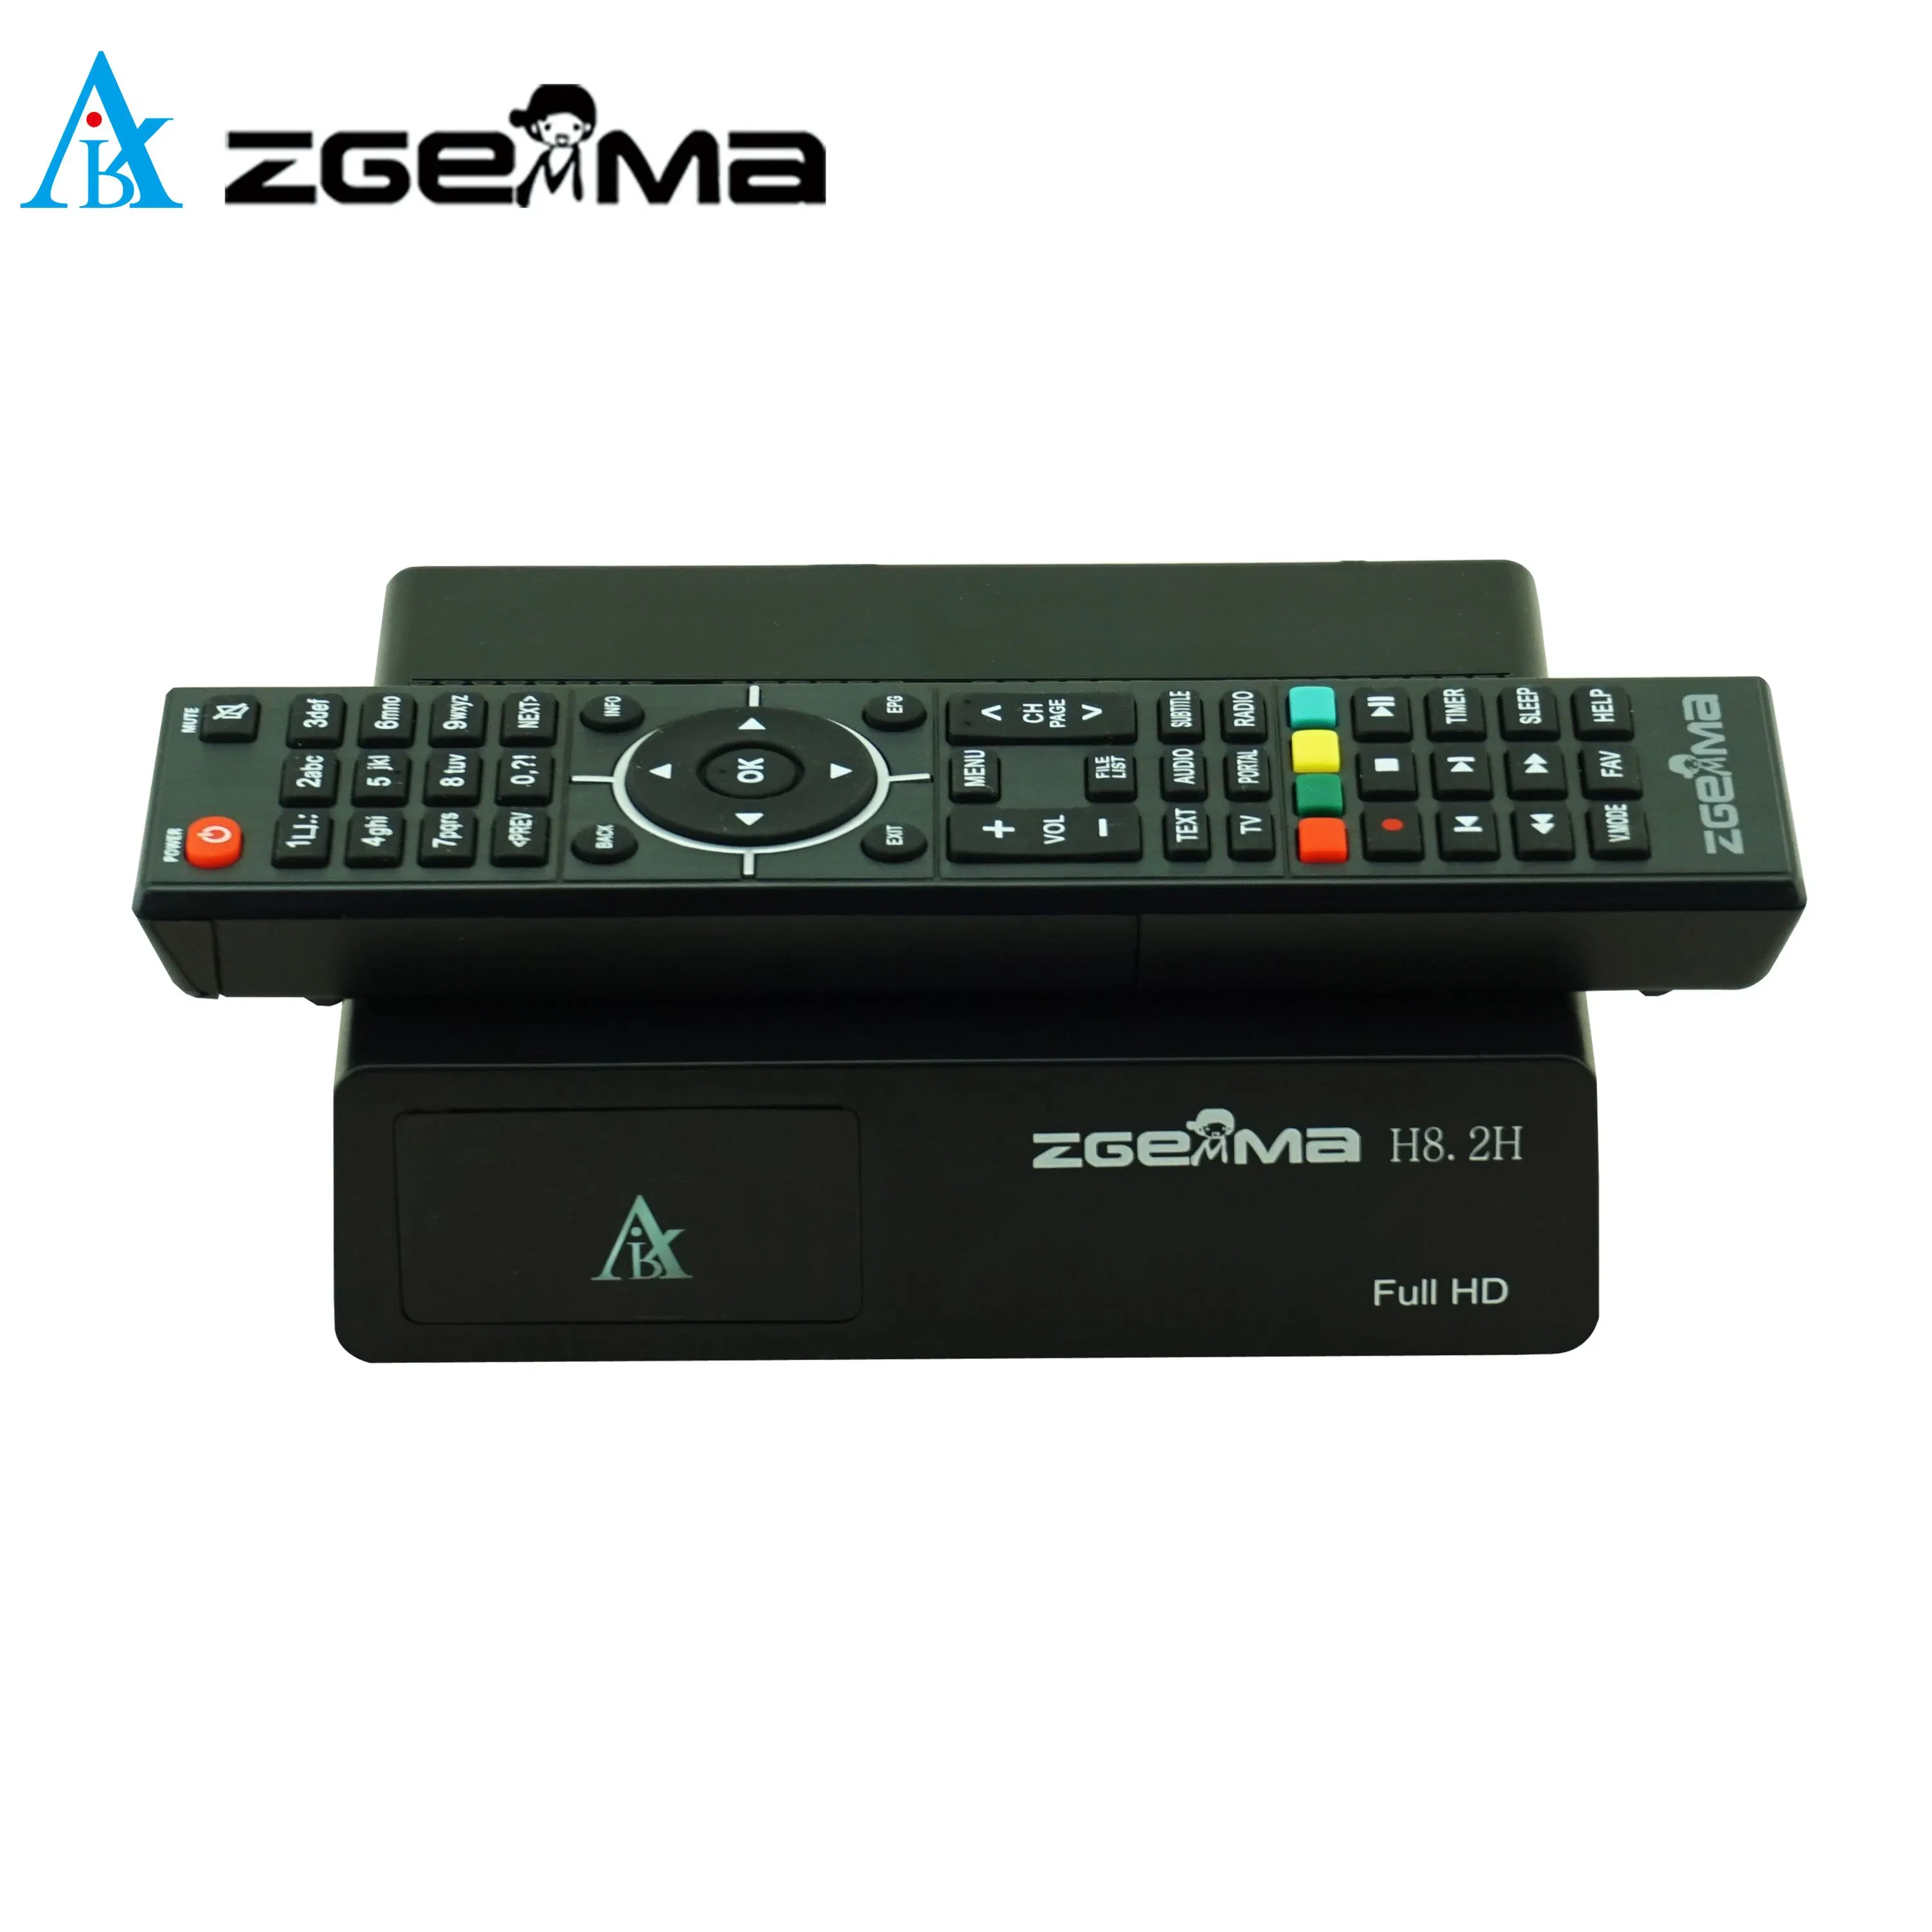 Zgemma H8.2h Satellite TV Receiver - High Definition 1080P Resolution, Built-in DVB-S2X + DVB-T2/C Tuner